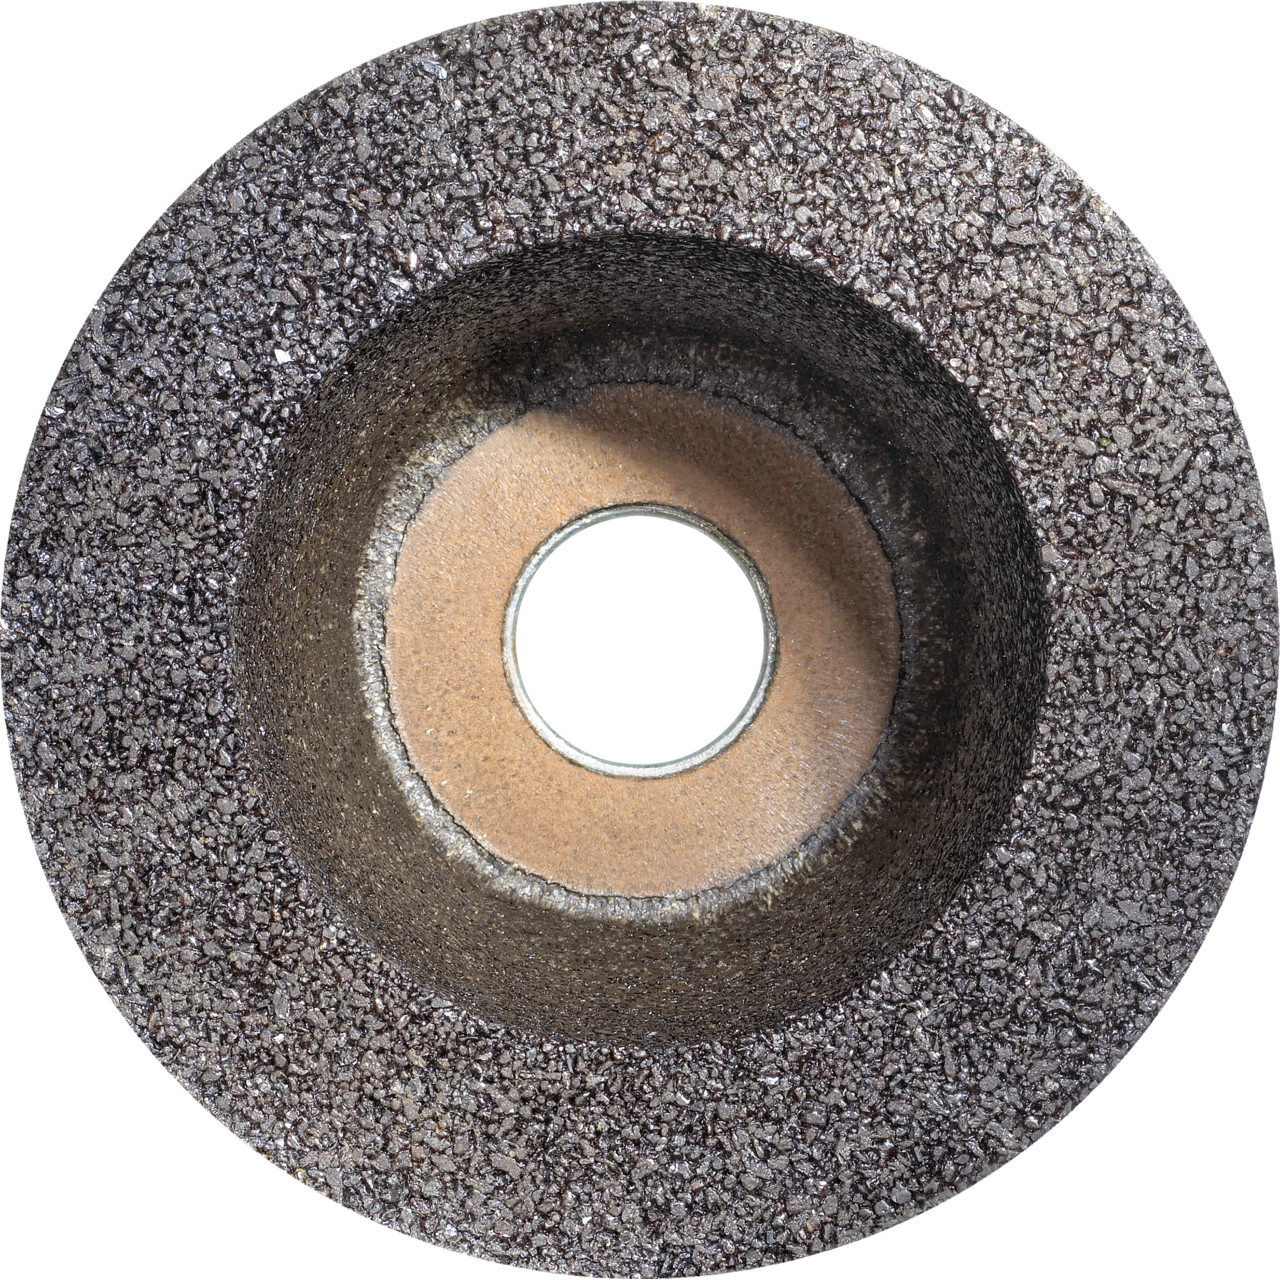 Tyrolit Tazza in resina DxTxGE 100x45xM14 Per pietra, forma: ruota a tazza 6ZB, Art. 83585